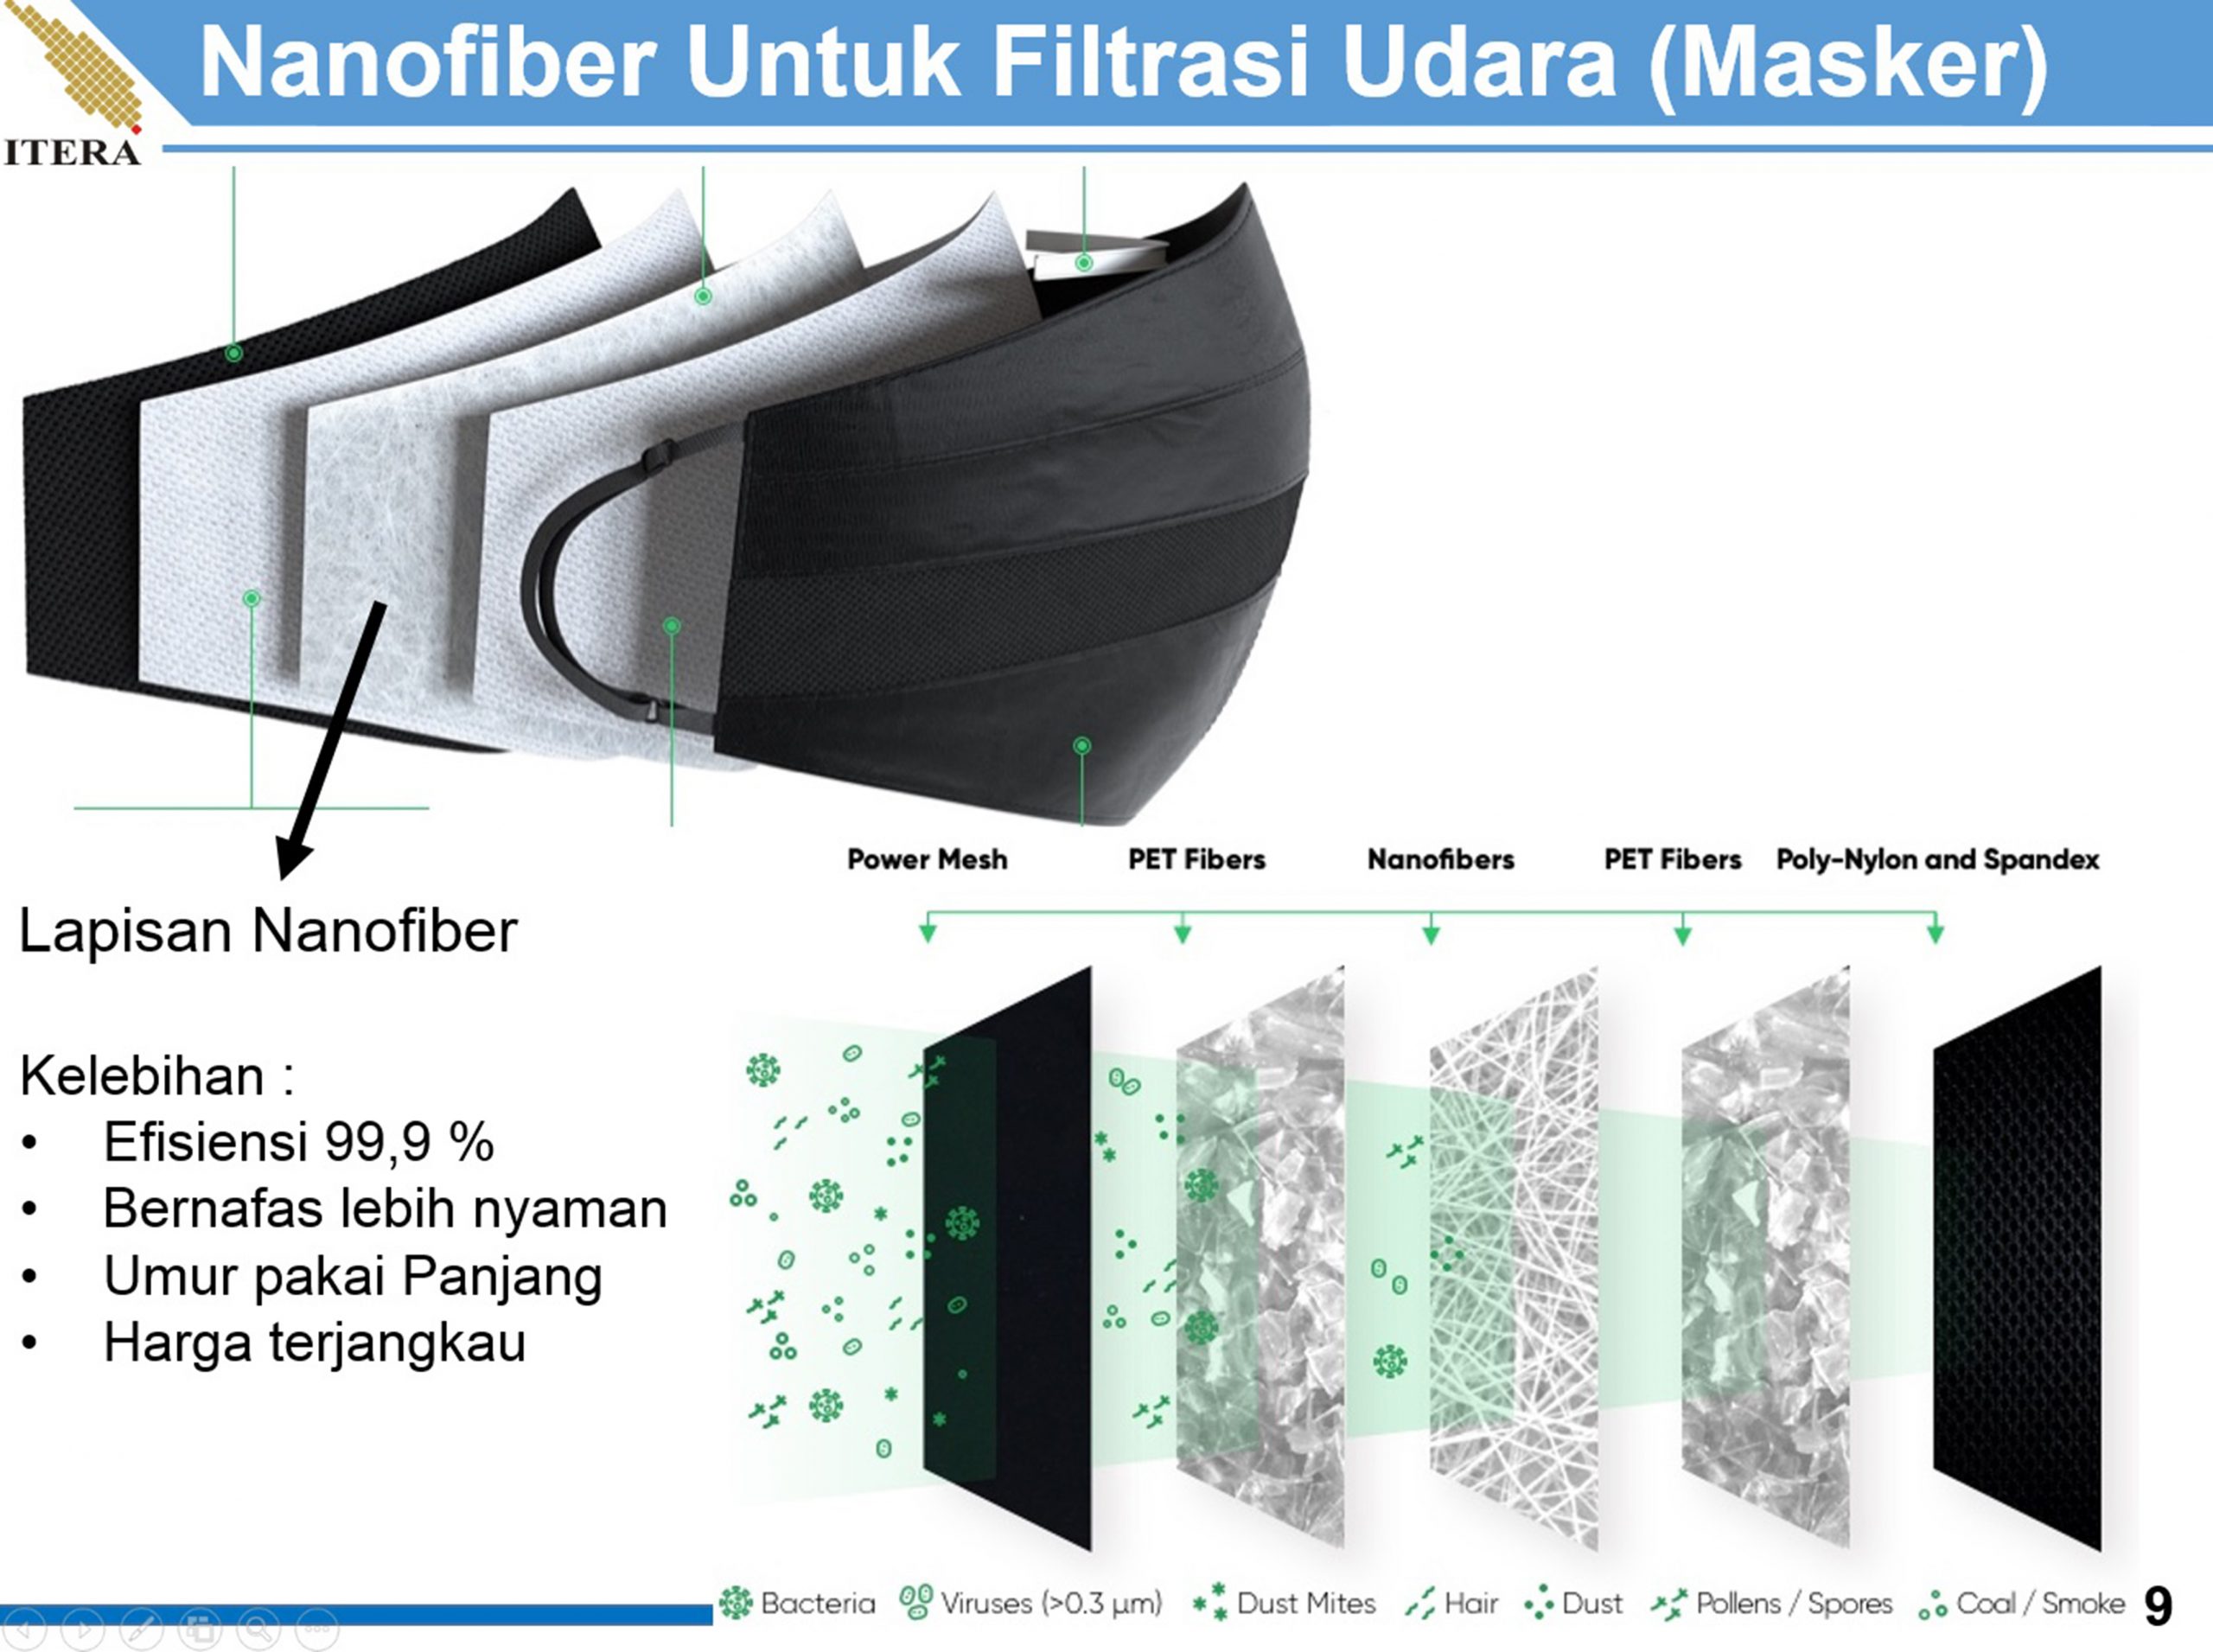 Dosen Fisika ITERA Kembangkan Penelitian Masker Nanofiber